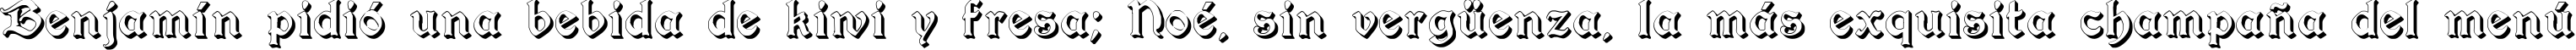 Пример написания шрифтом Augusta Shadow текста на испанском